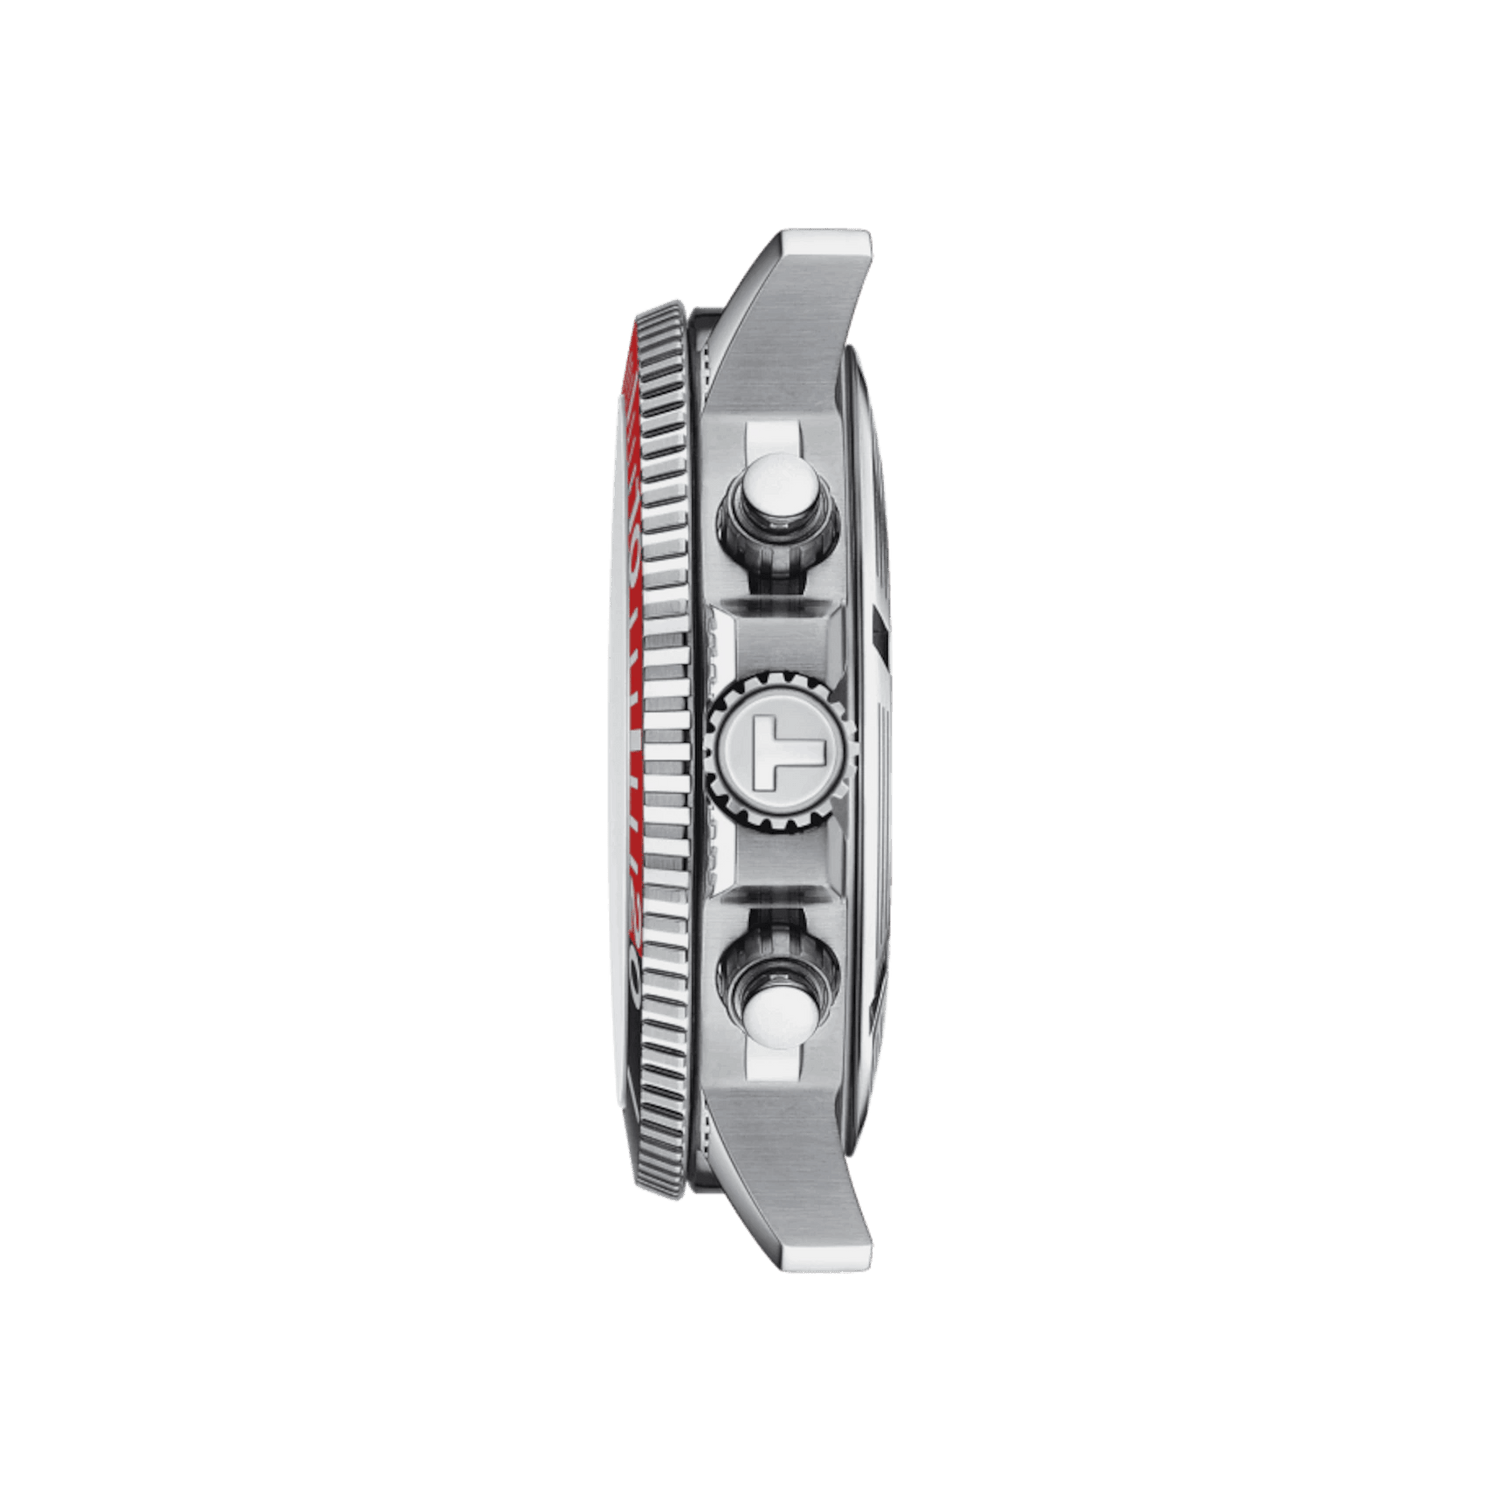 Tissot Seastar 1000 Chronograph - Brunott Juwelier